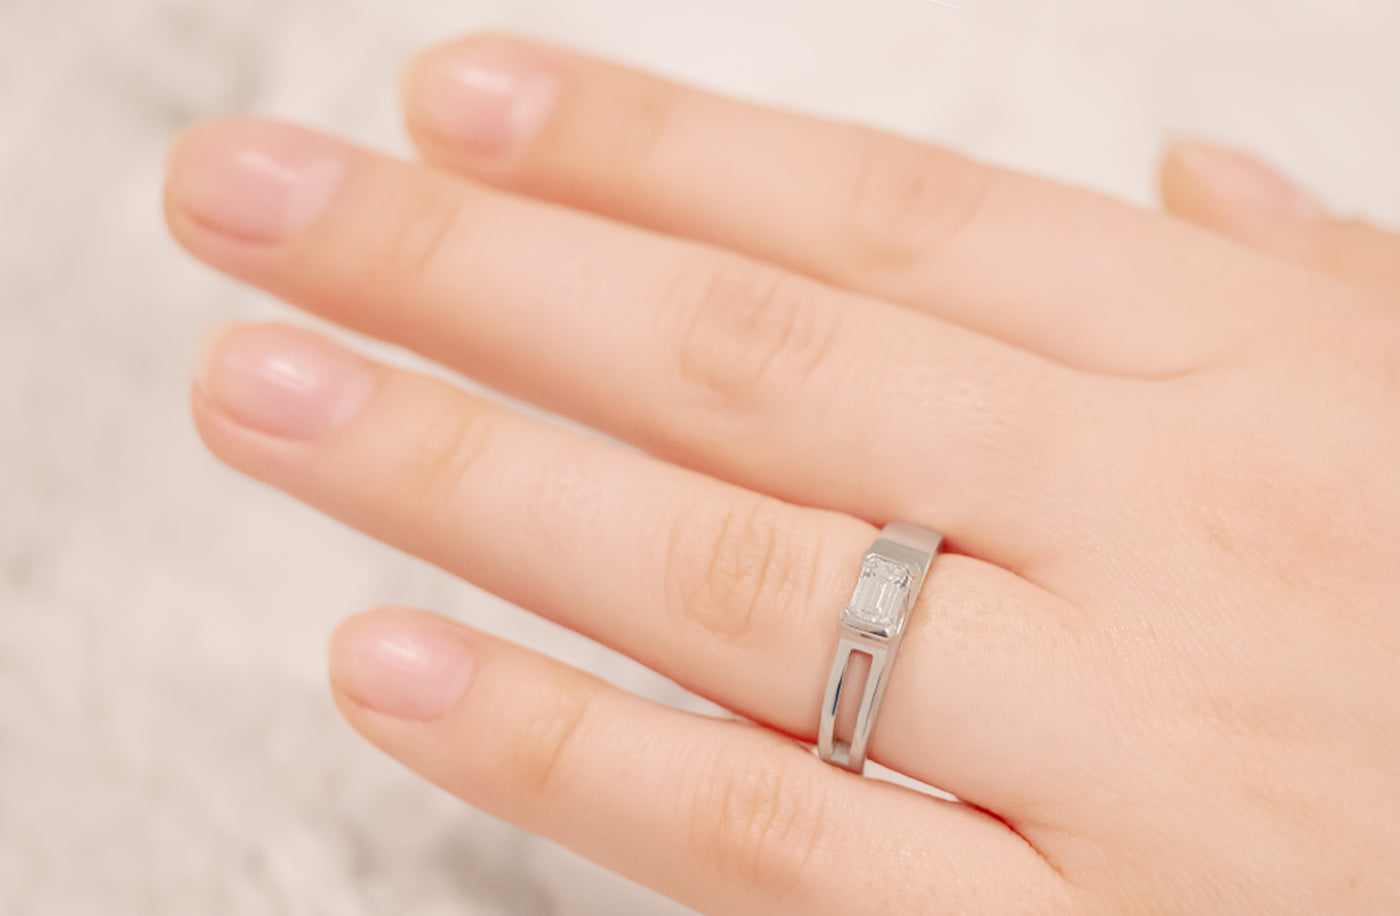 Levald: Emerald Cut Diamond Solitaire Ring